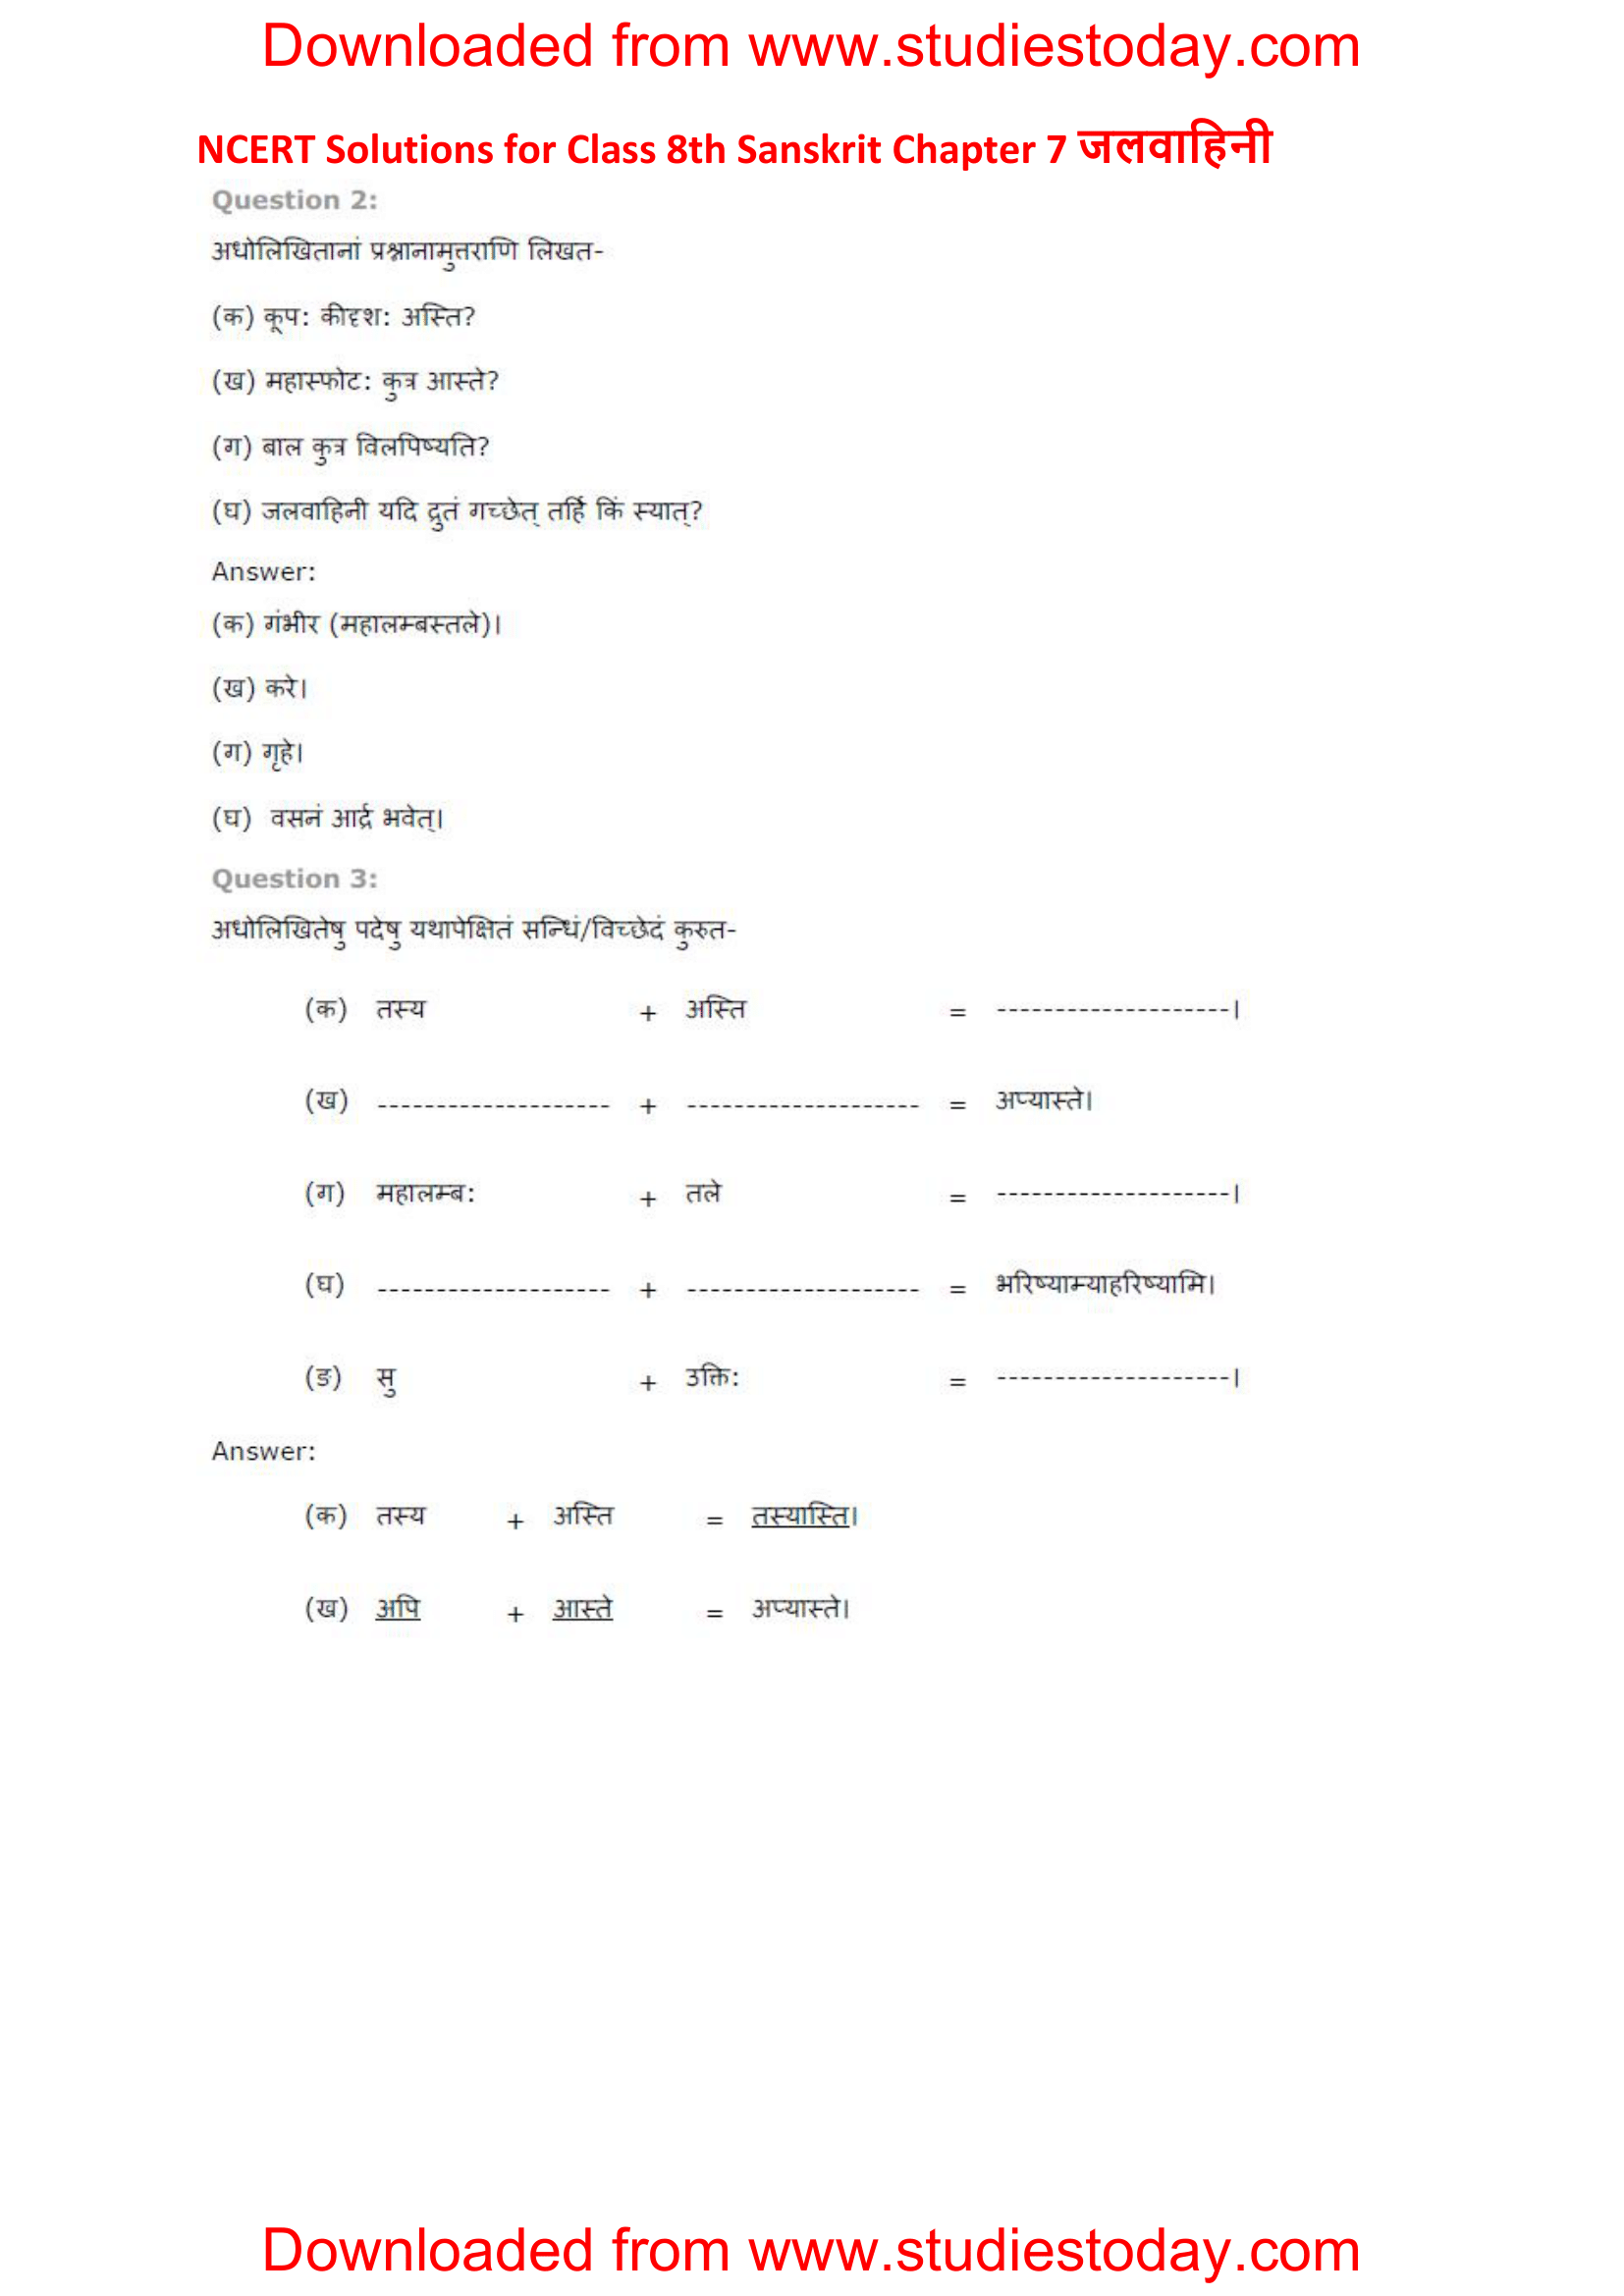 ncert-solutions-class-8-sanskrit-chapter-7-jalvahini-1